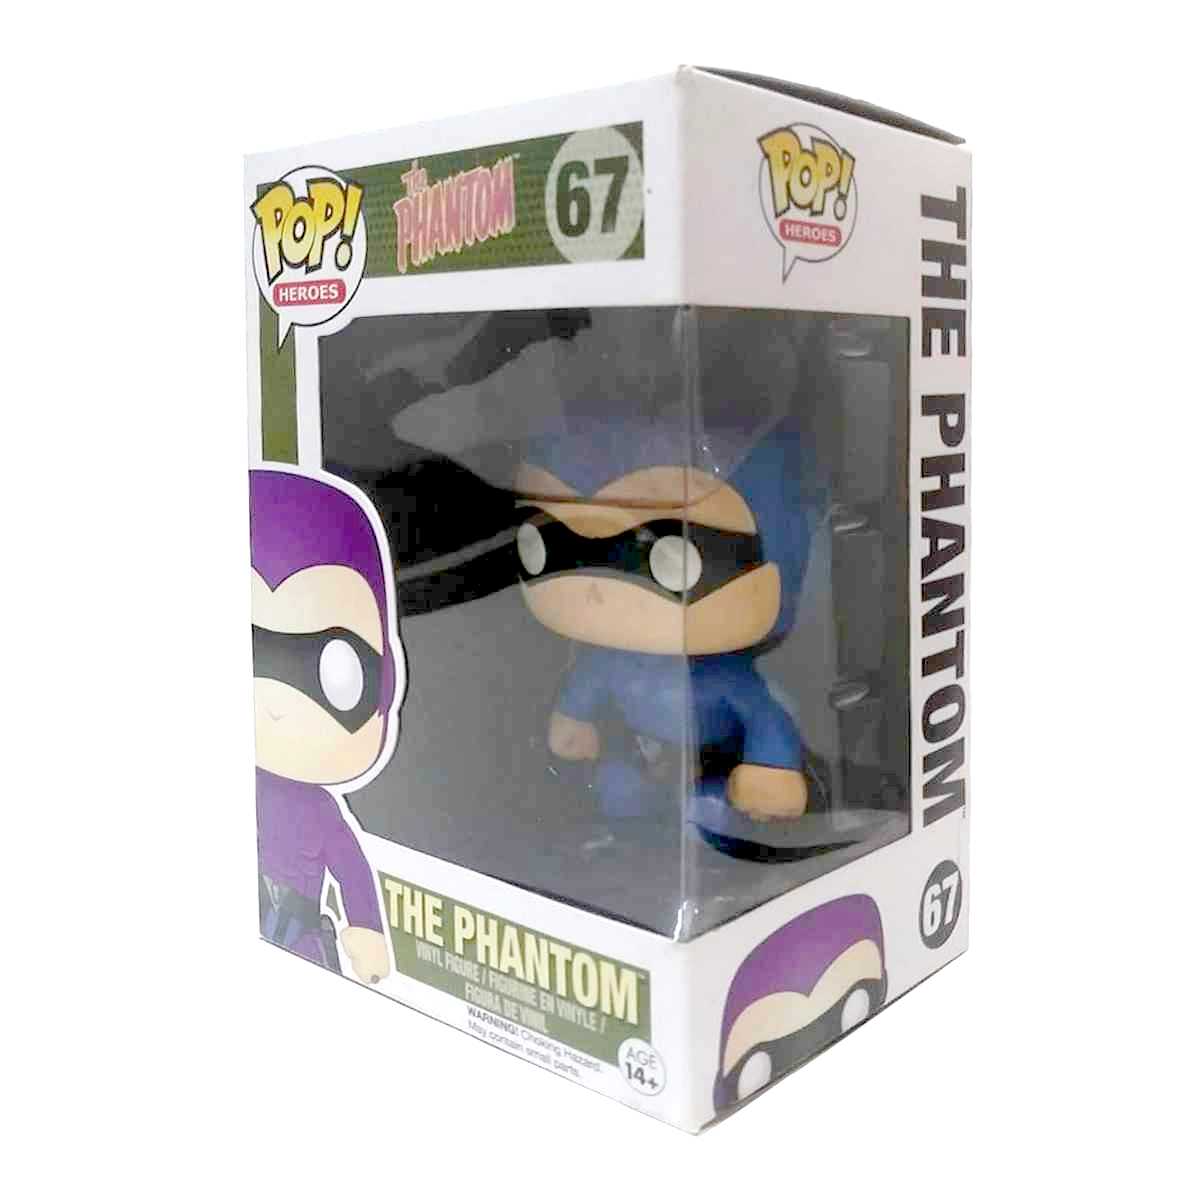  Funko POP Heroes The Phantom Action Figure : Funko